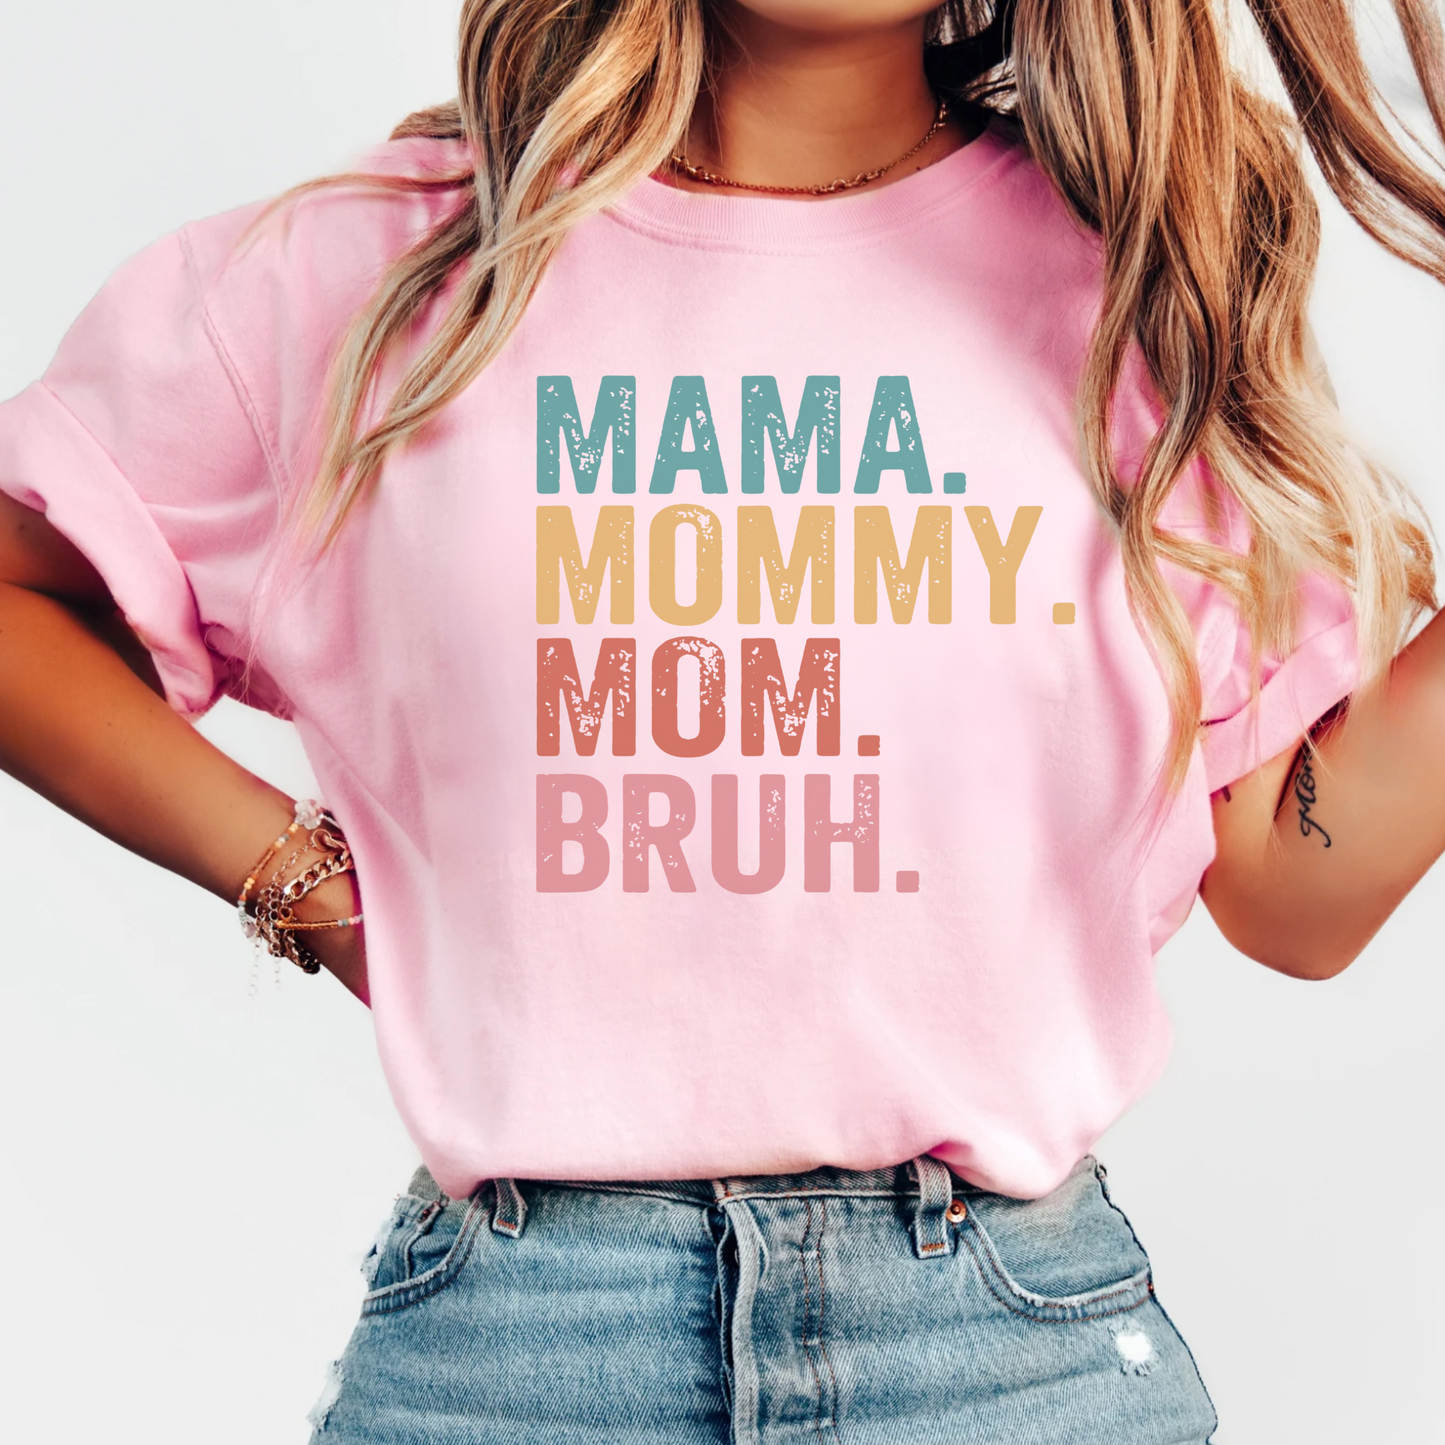 Mama, Mommy, Mom Bruh T-Shirt